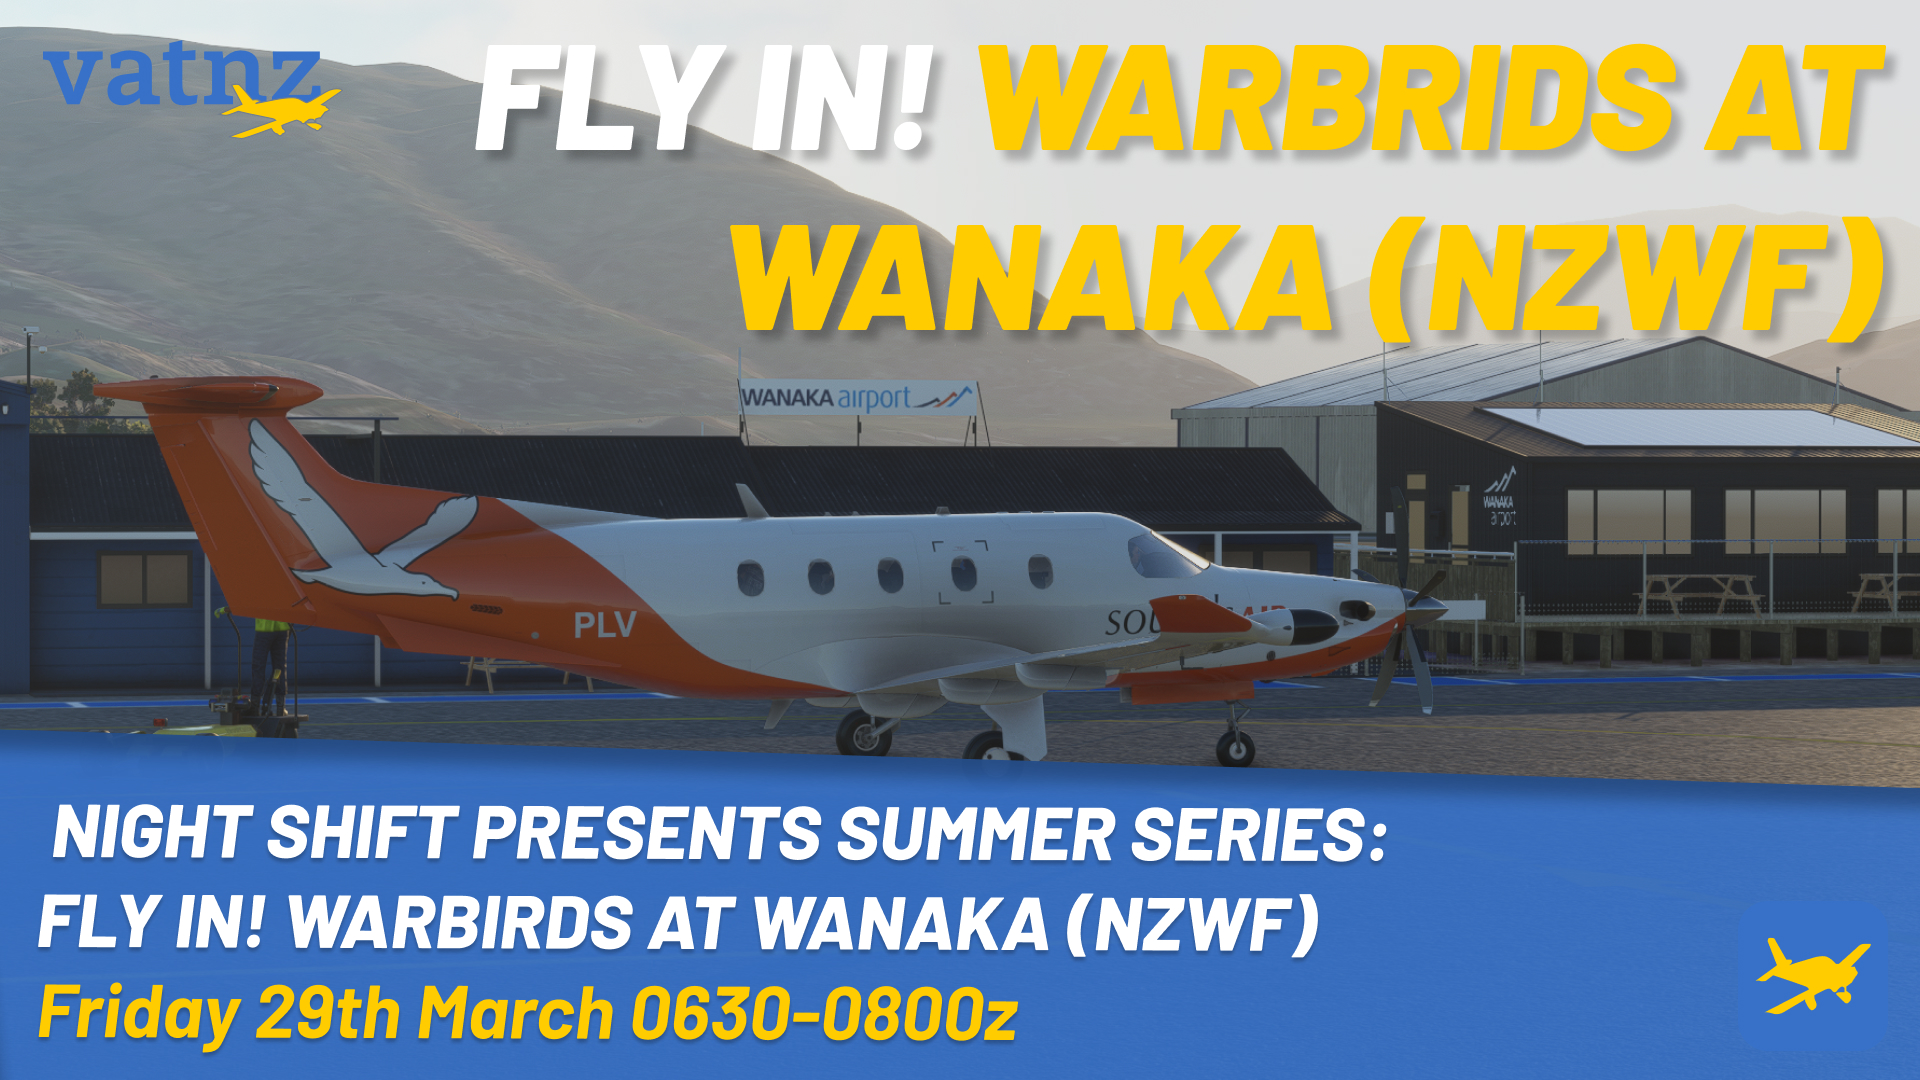 Night Shift Summer Series Presents: Fly-in! Warbirds at Wanaka